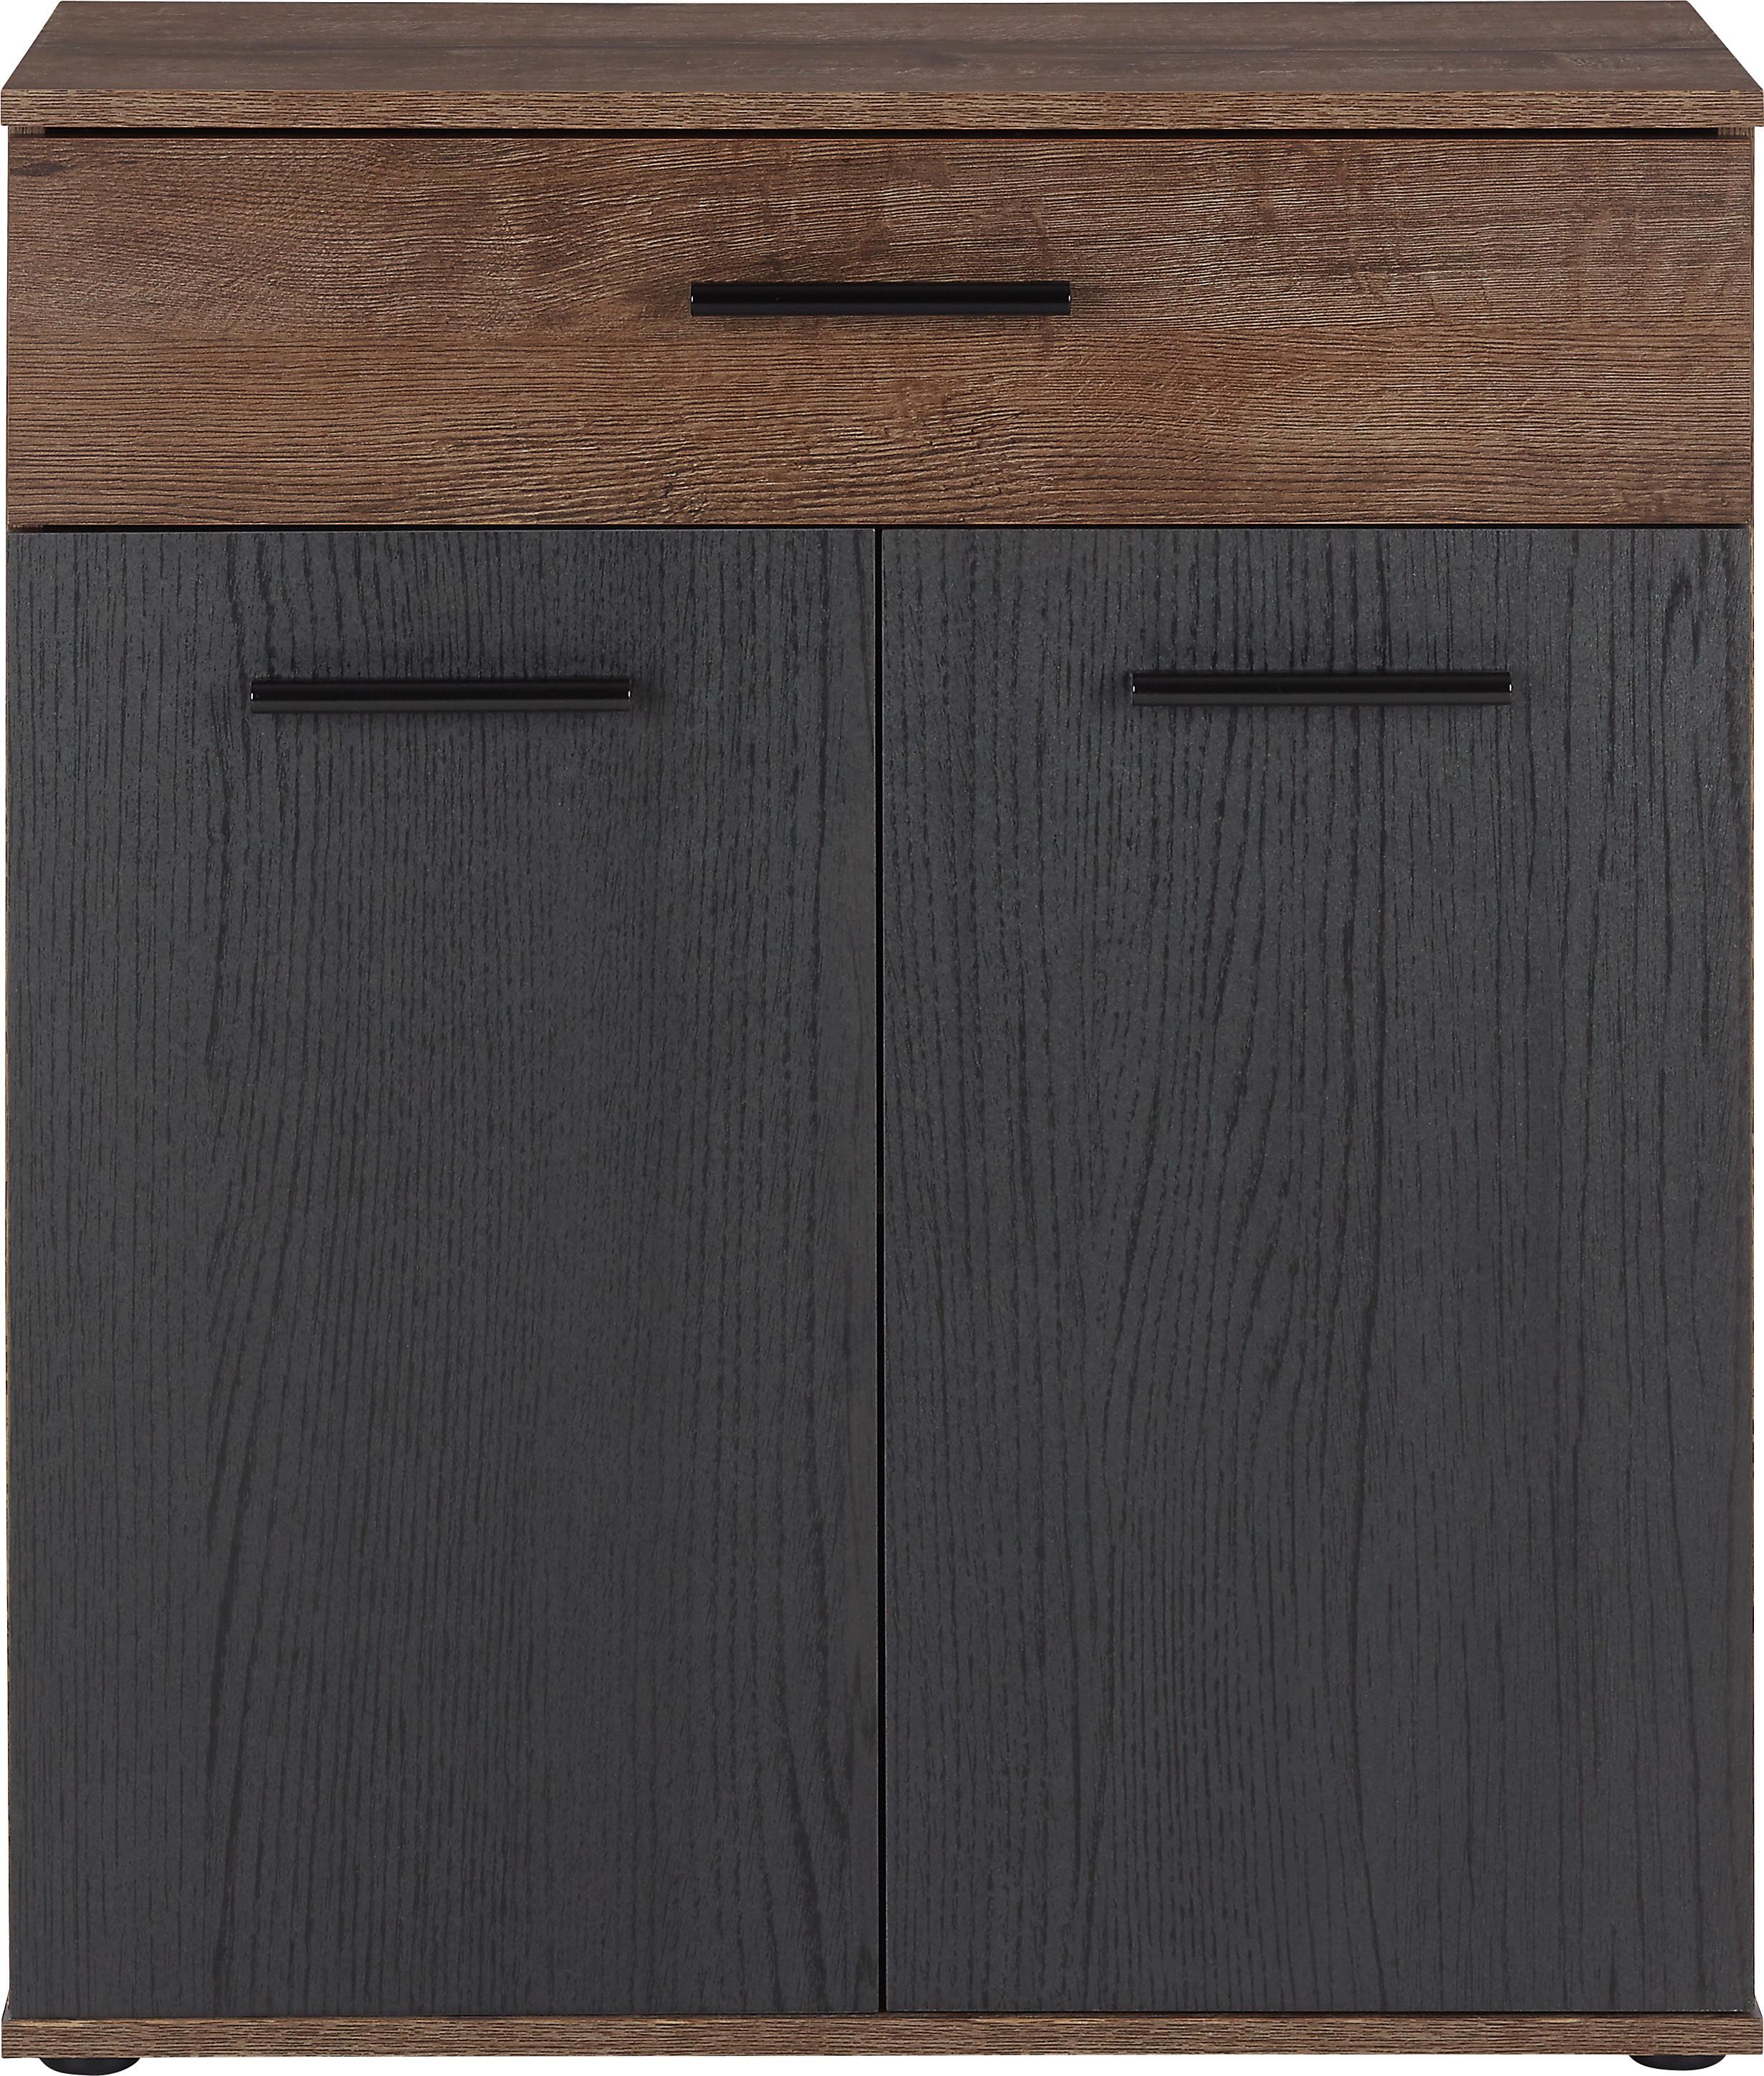 Komoda Tokio - černá/barvy dubu, Moderní, kov/kompozitní dřevo (69,9/82,8/34,9cm)